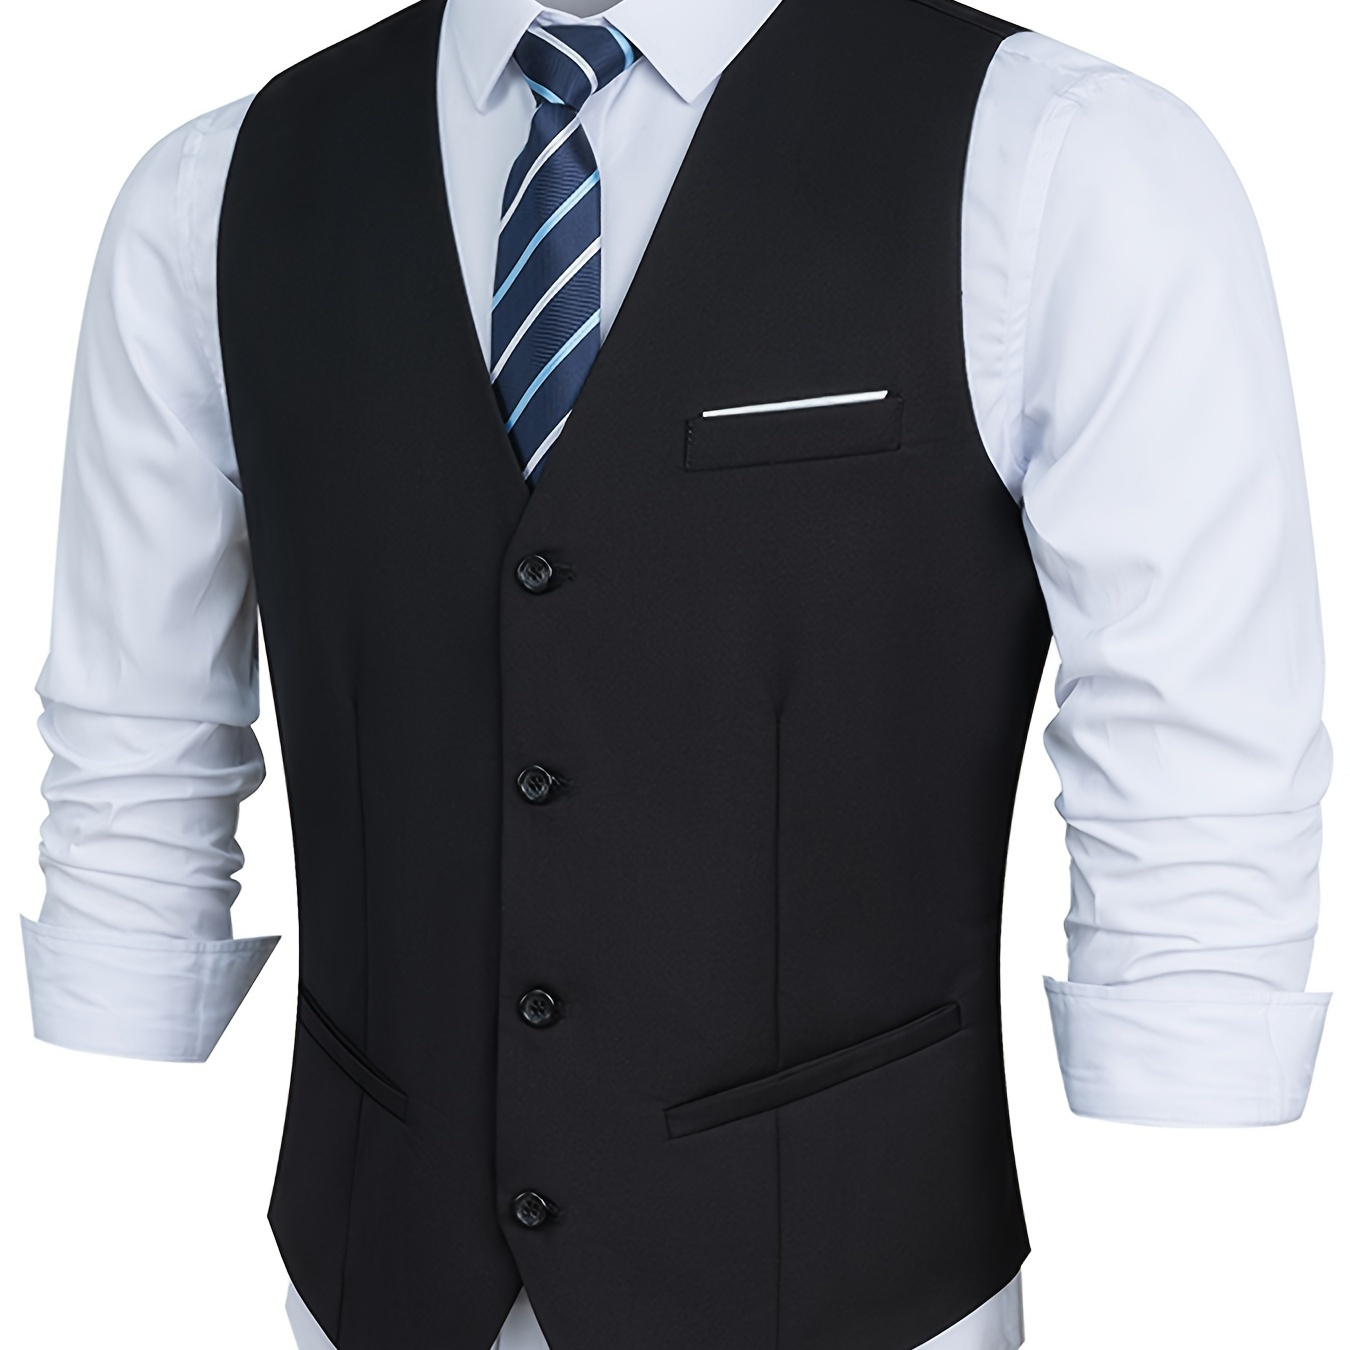 

Men's Formal Suit Vest, Classic Solid Color Business Waistcoat, Essential Style, Sleeveless Dress Vest For Business Attire